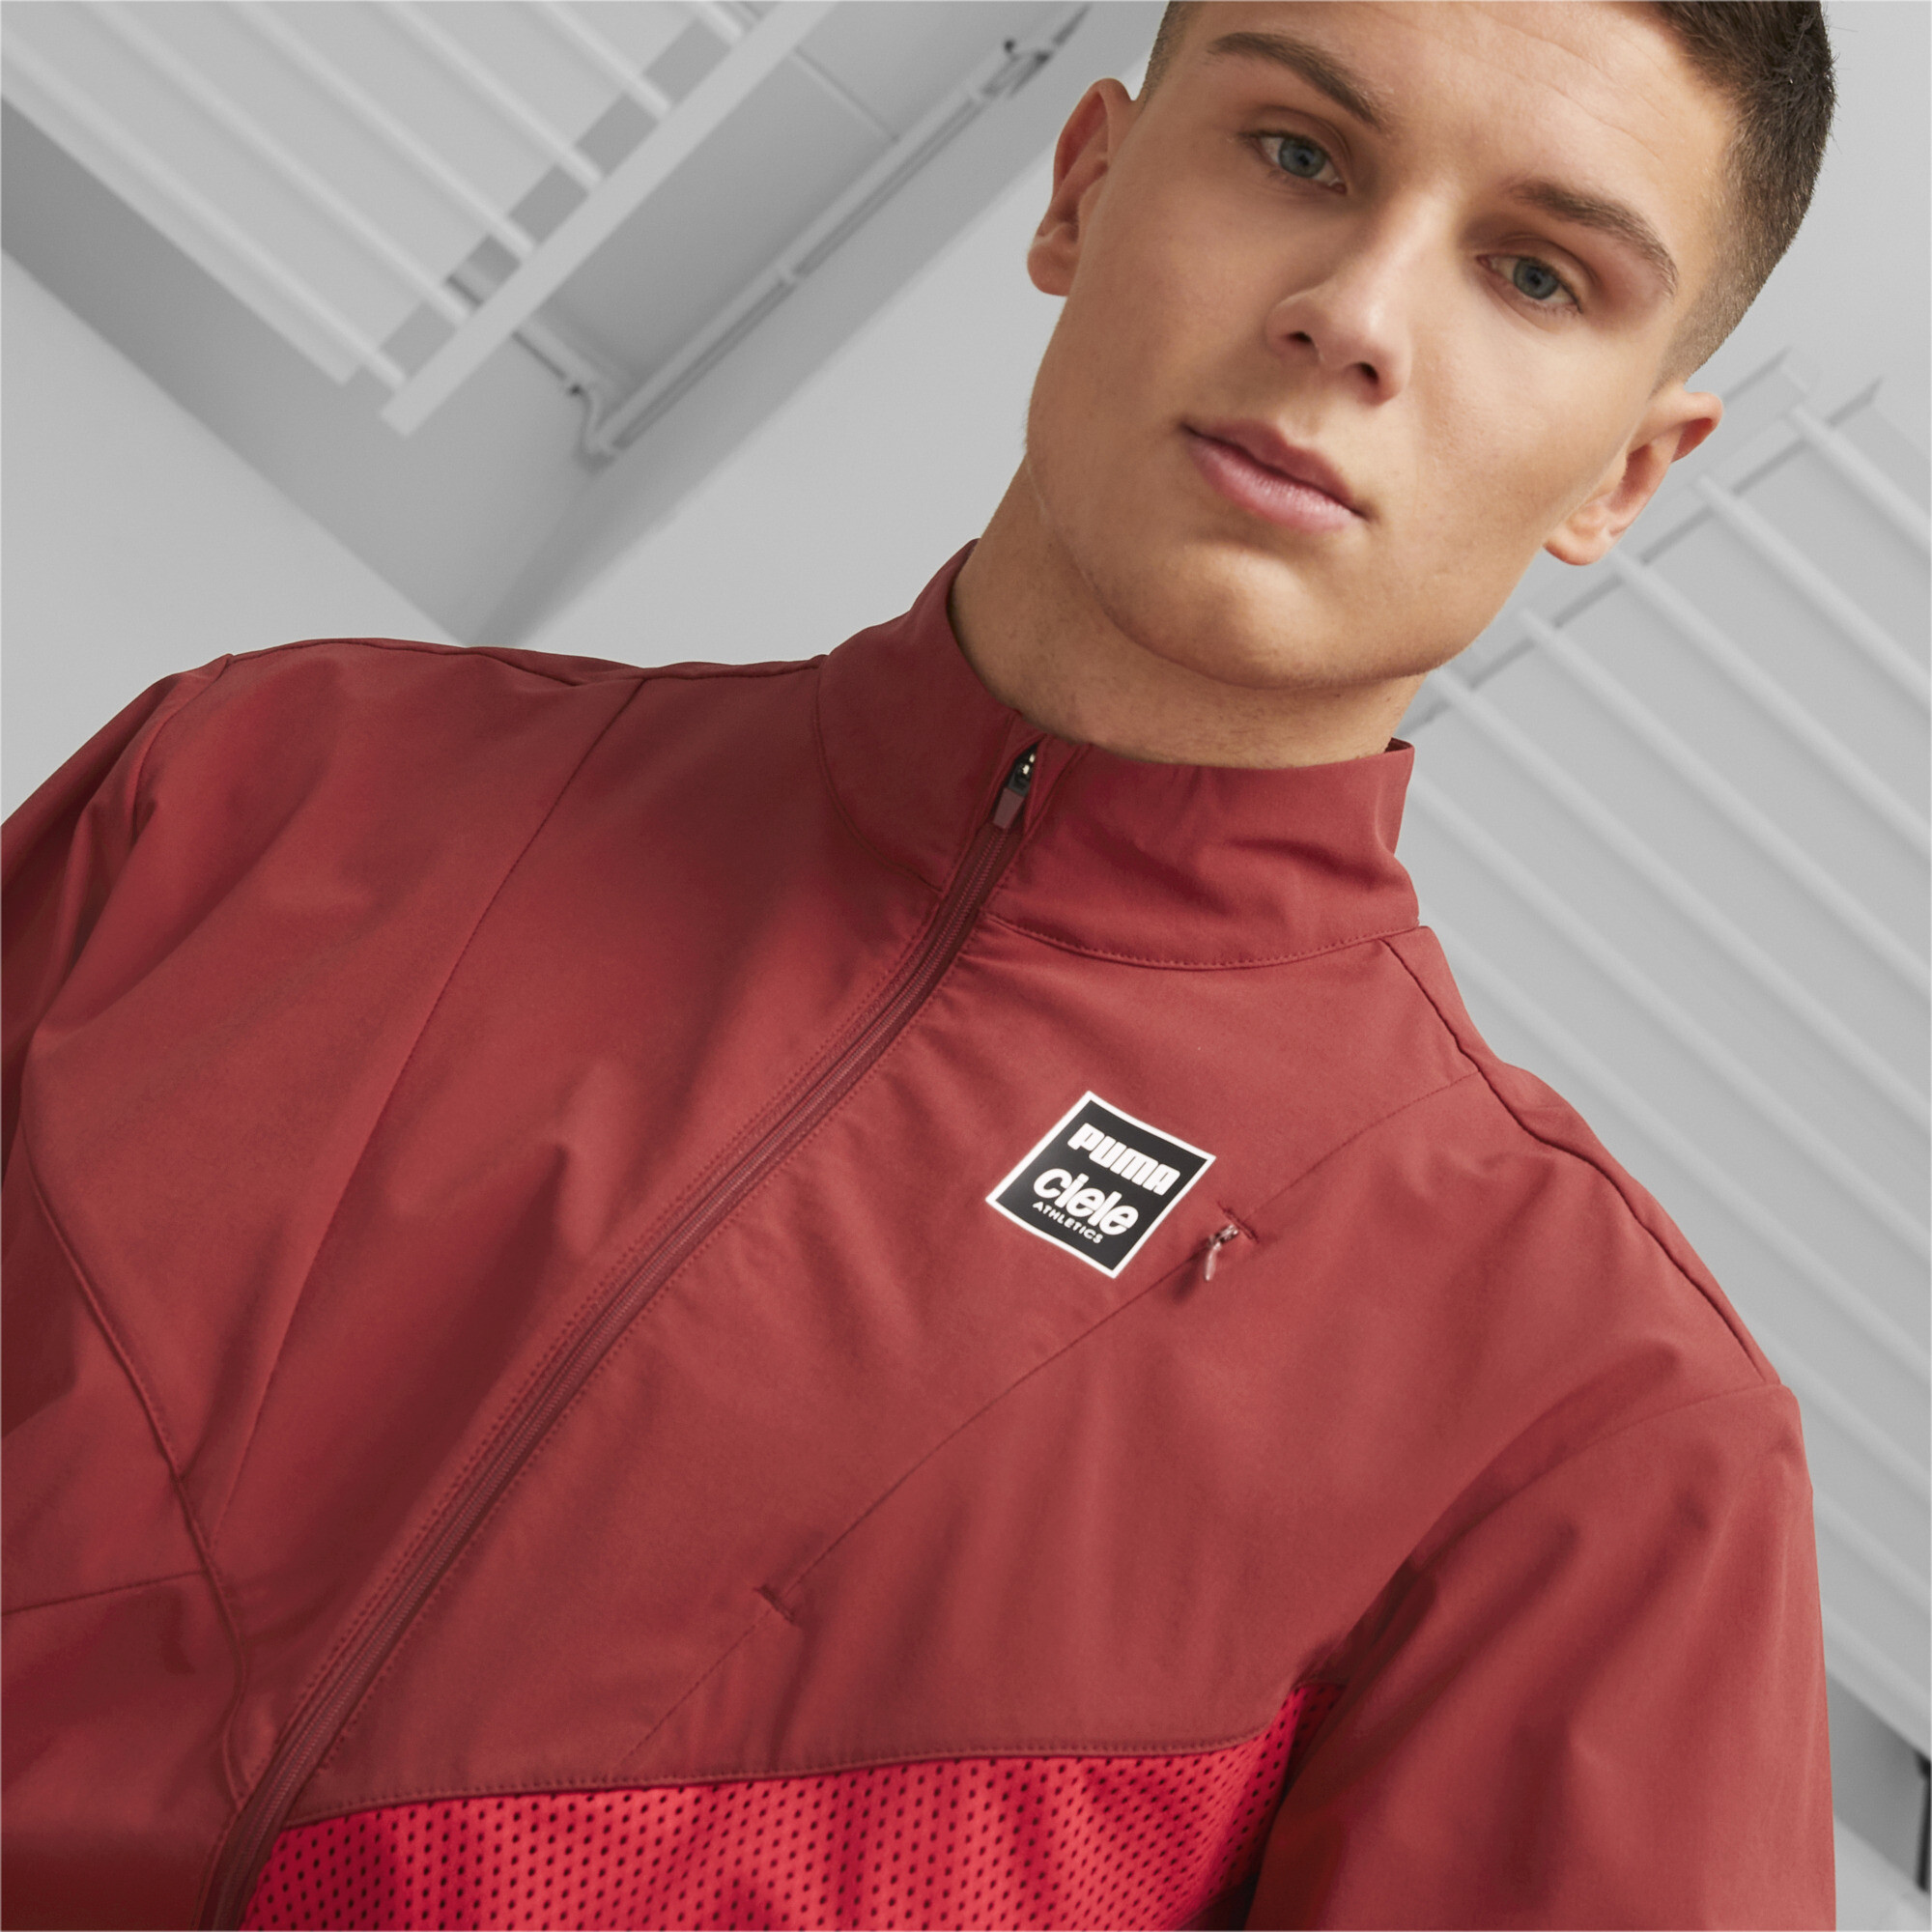 Men's PUMA X CIELE Running Tracksuit Jacket In Red, Size Medium